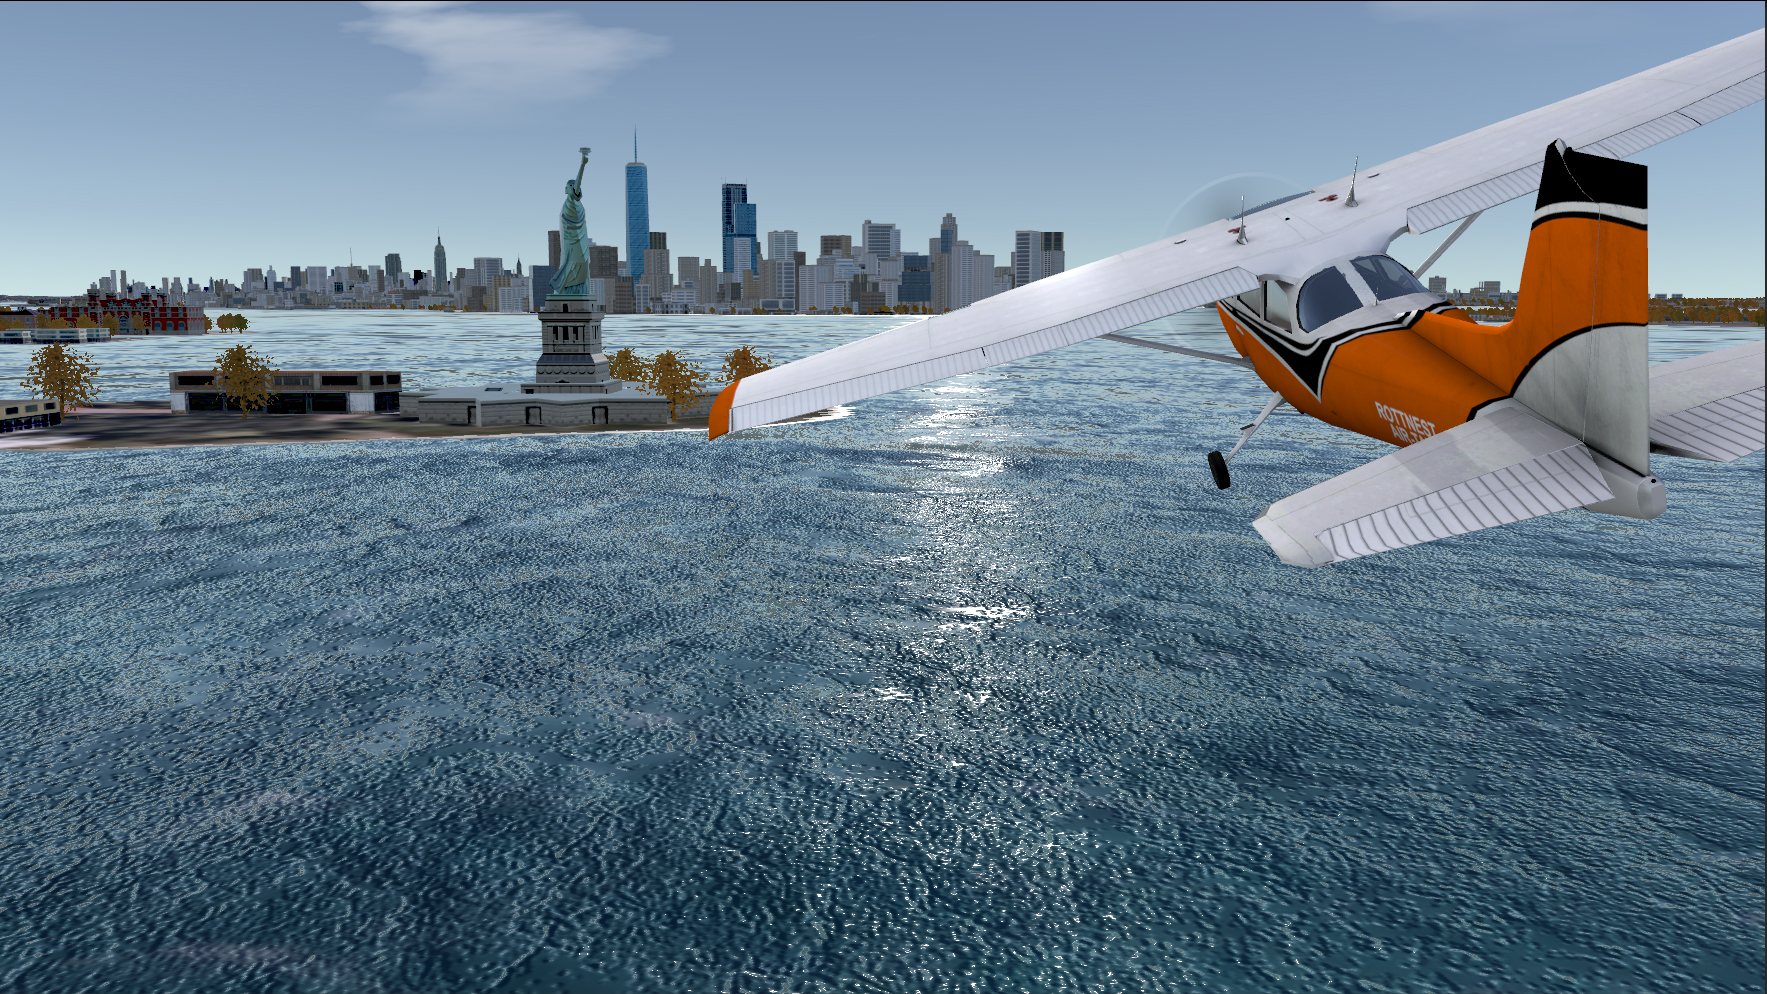 Flight Simulator New York - Cessna on Steam